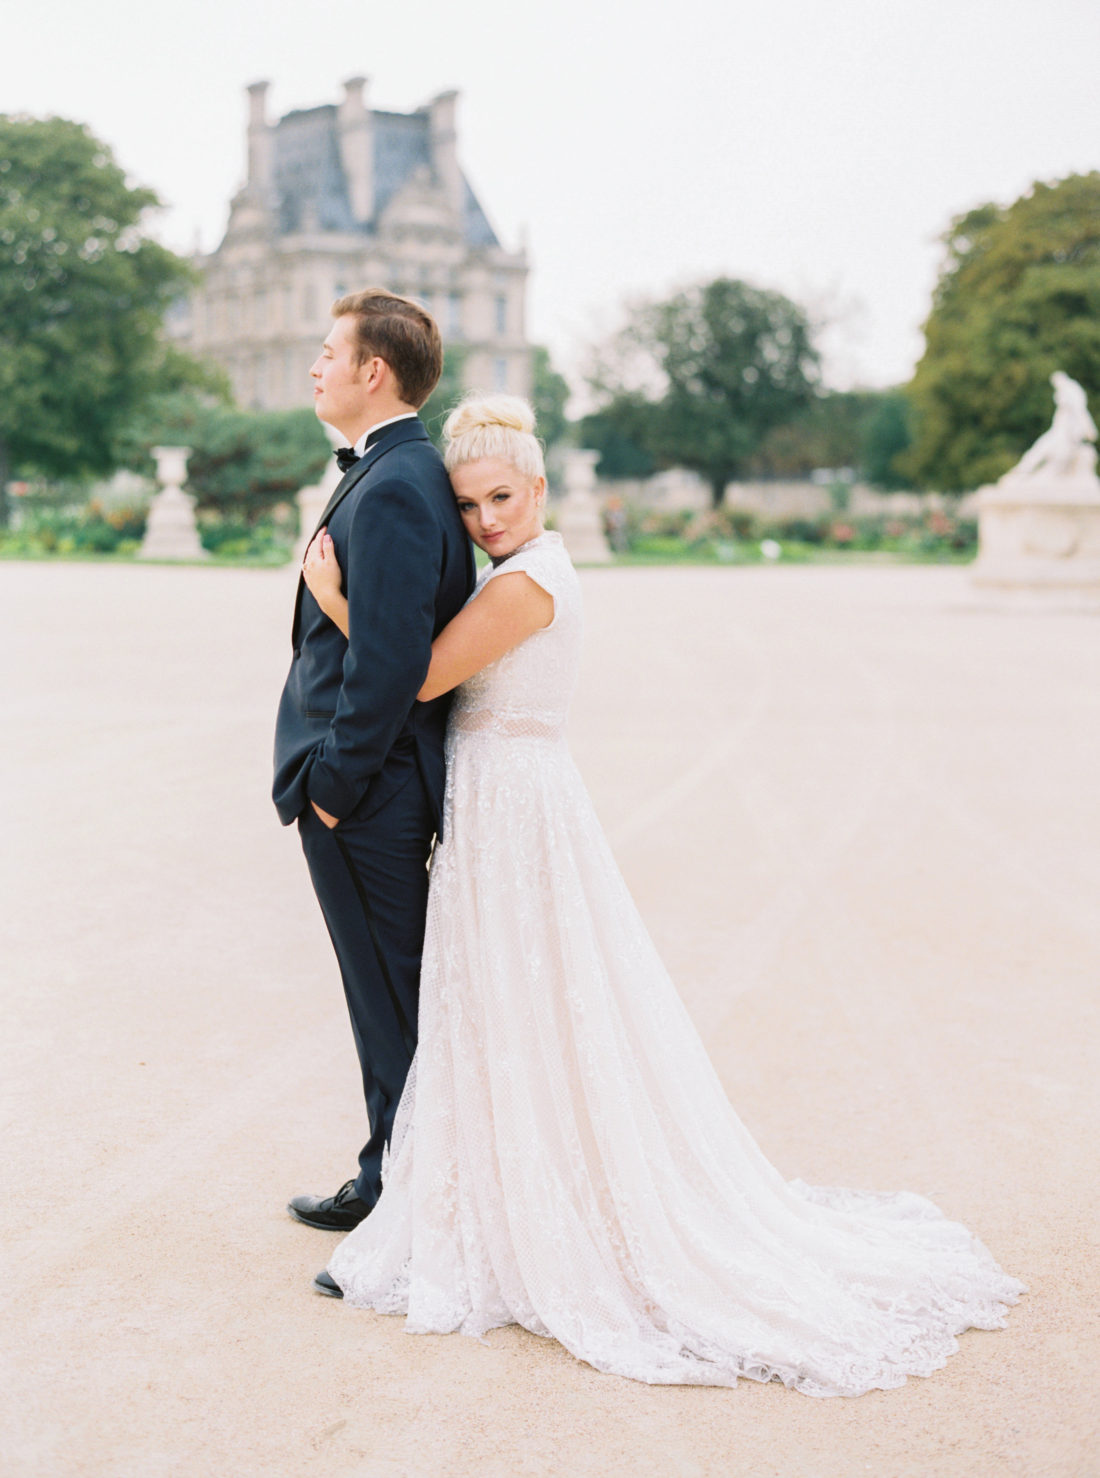 paris wedding planner rachael ellen events tips post photo 4